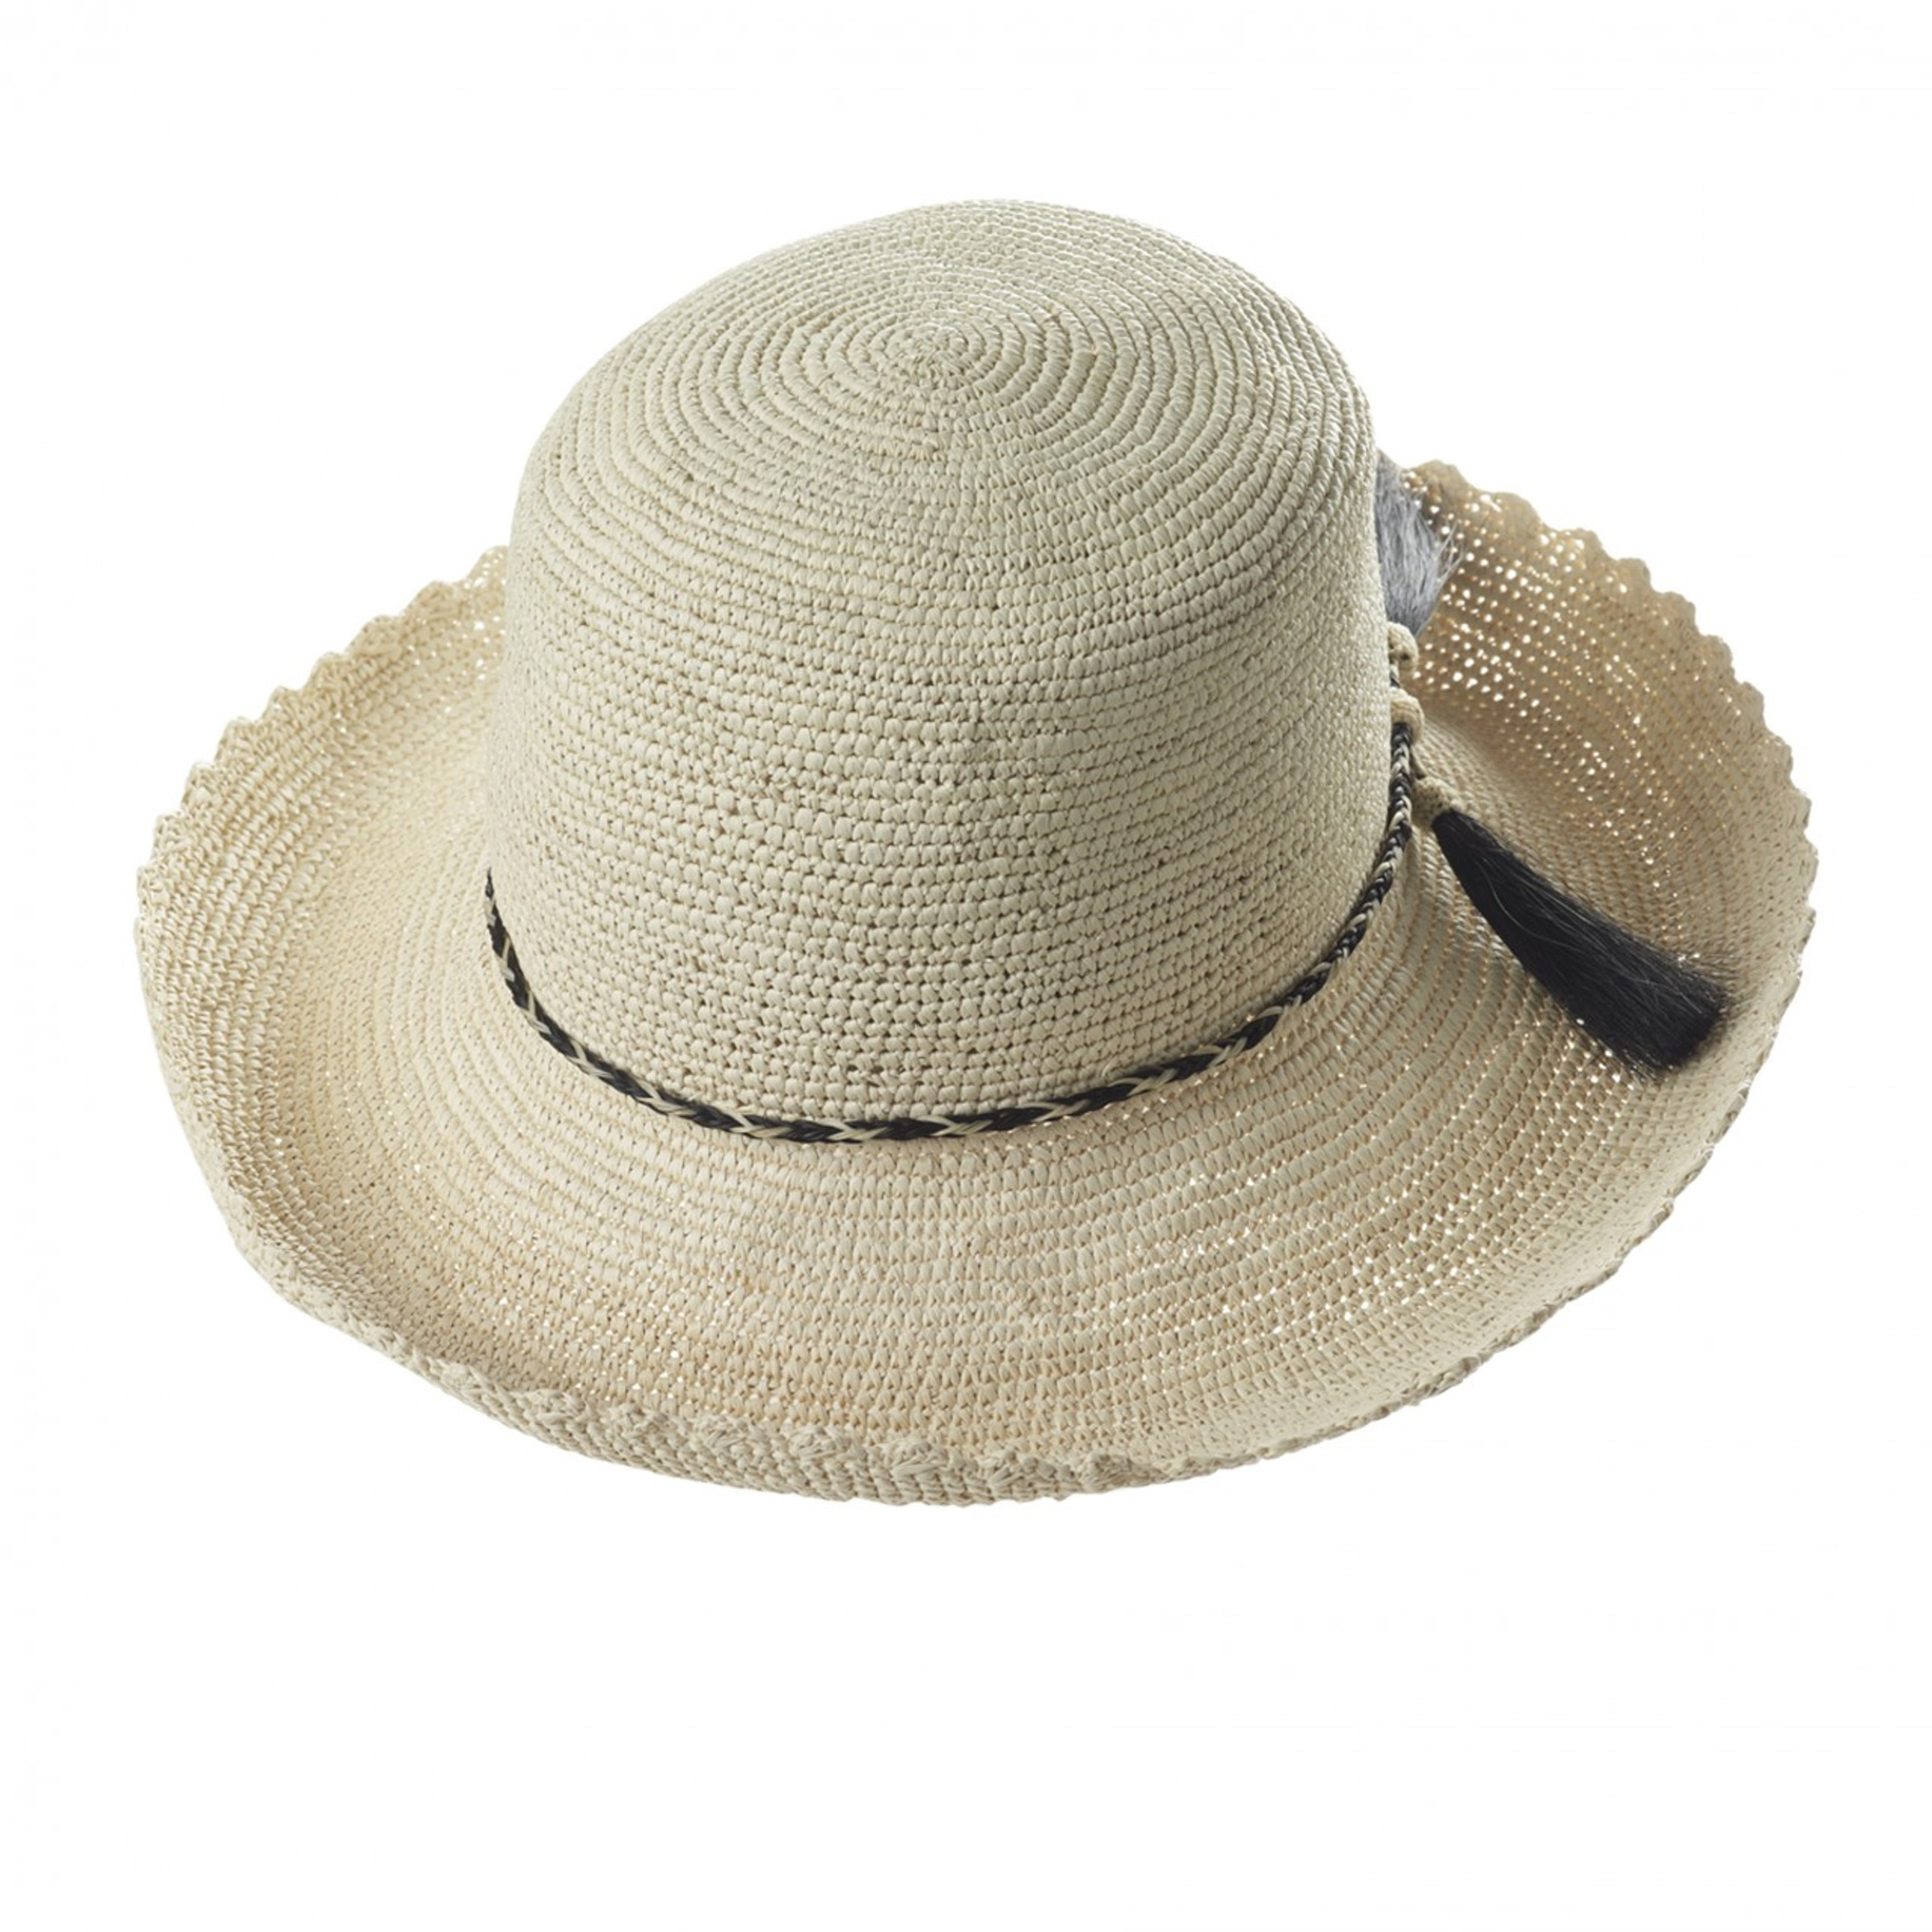 Ladies Rosita Crochet Panama - The Panama Hat Company